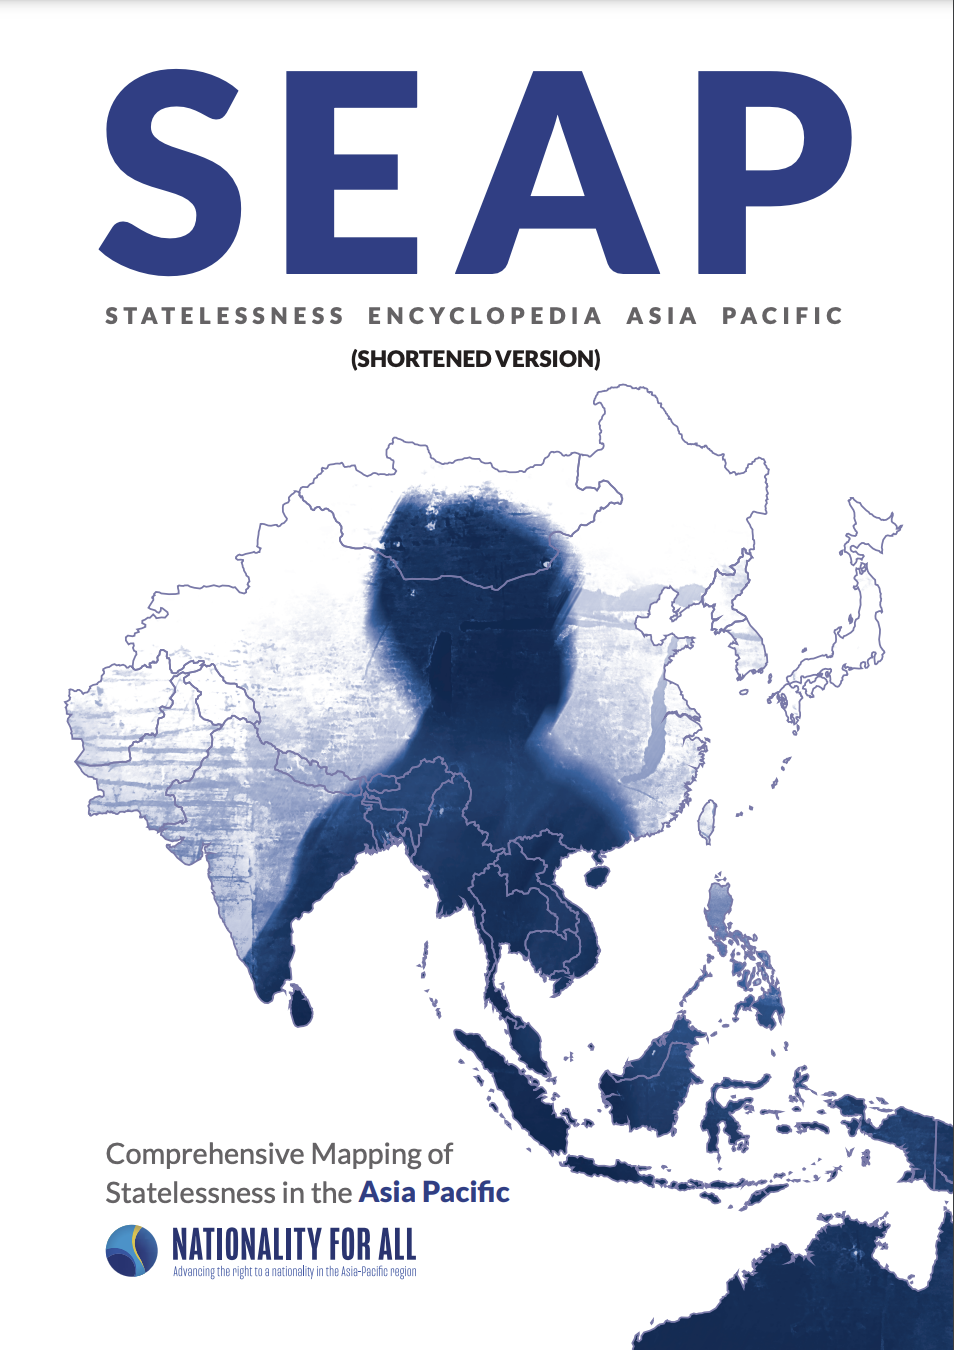 Statelessness Encyclopedia Asia Pacific (SEAP) 2024: Shortened Version